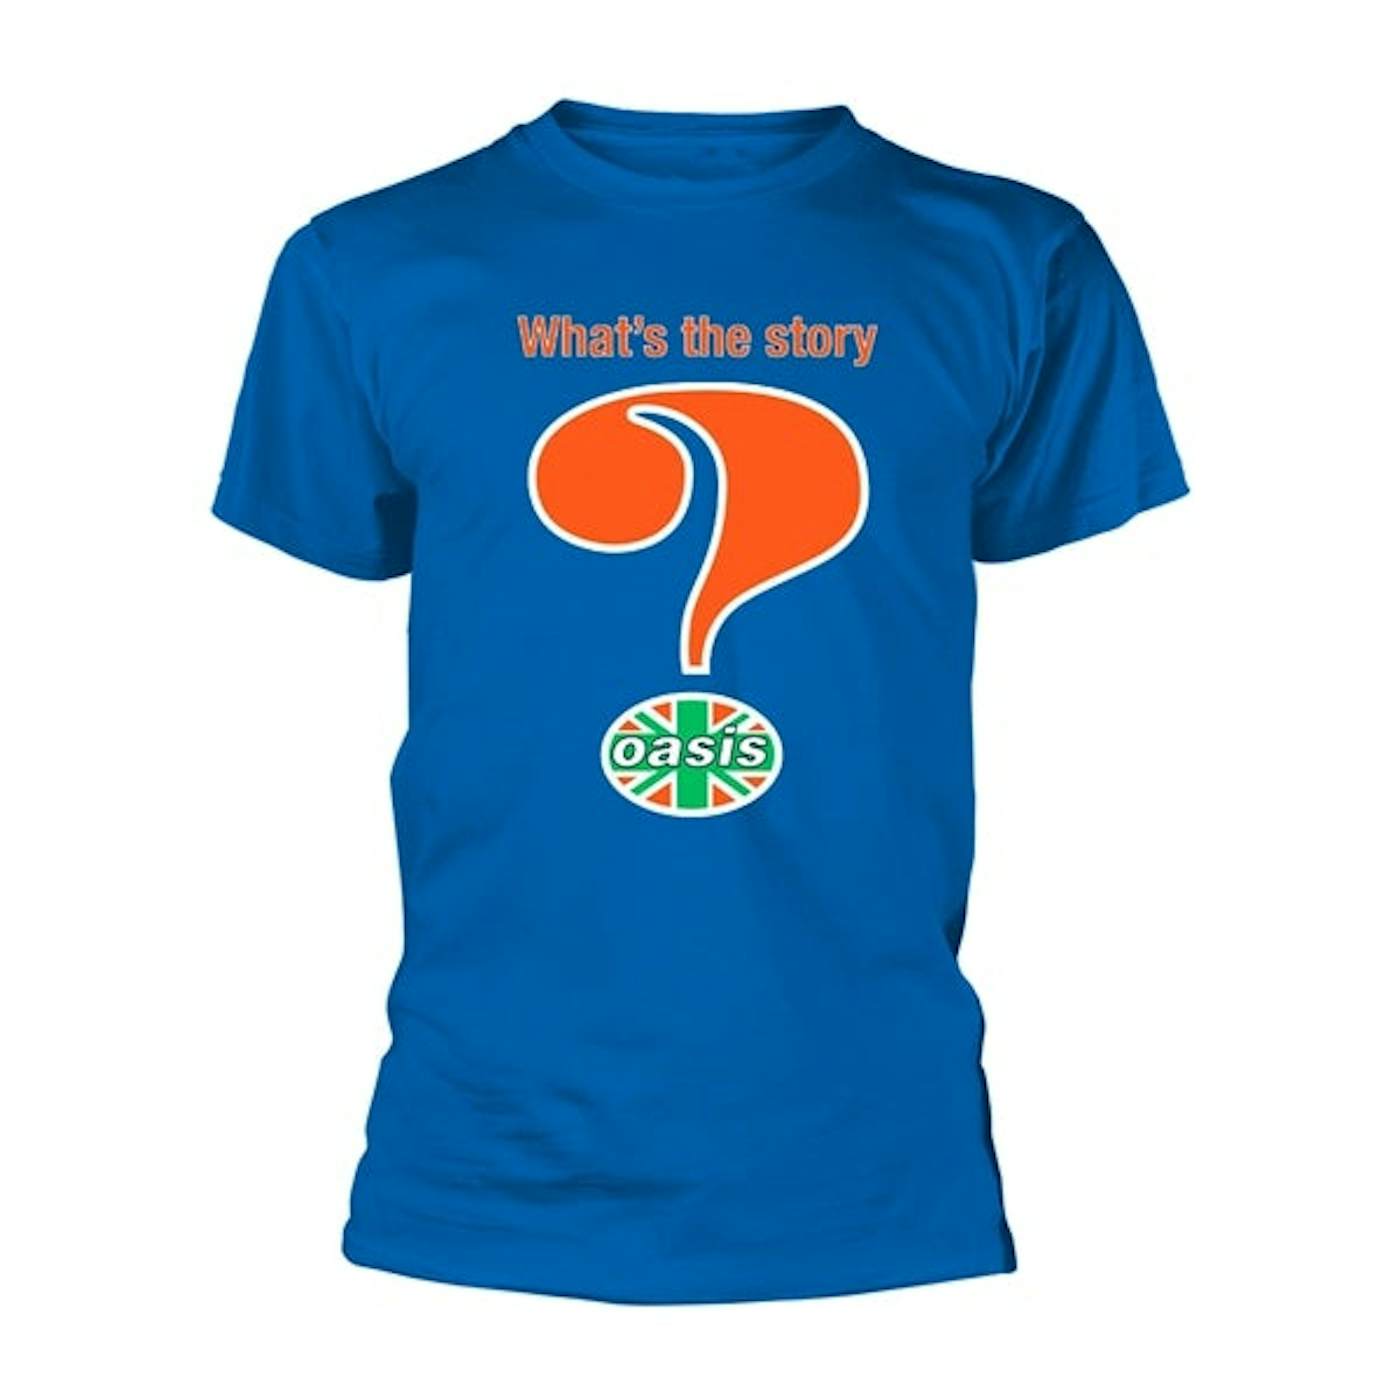 Oasis T Shirt - Question Mark (Royal)